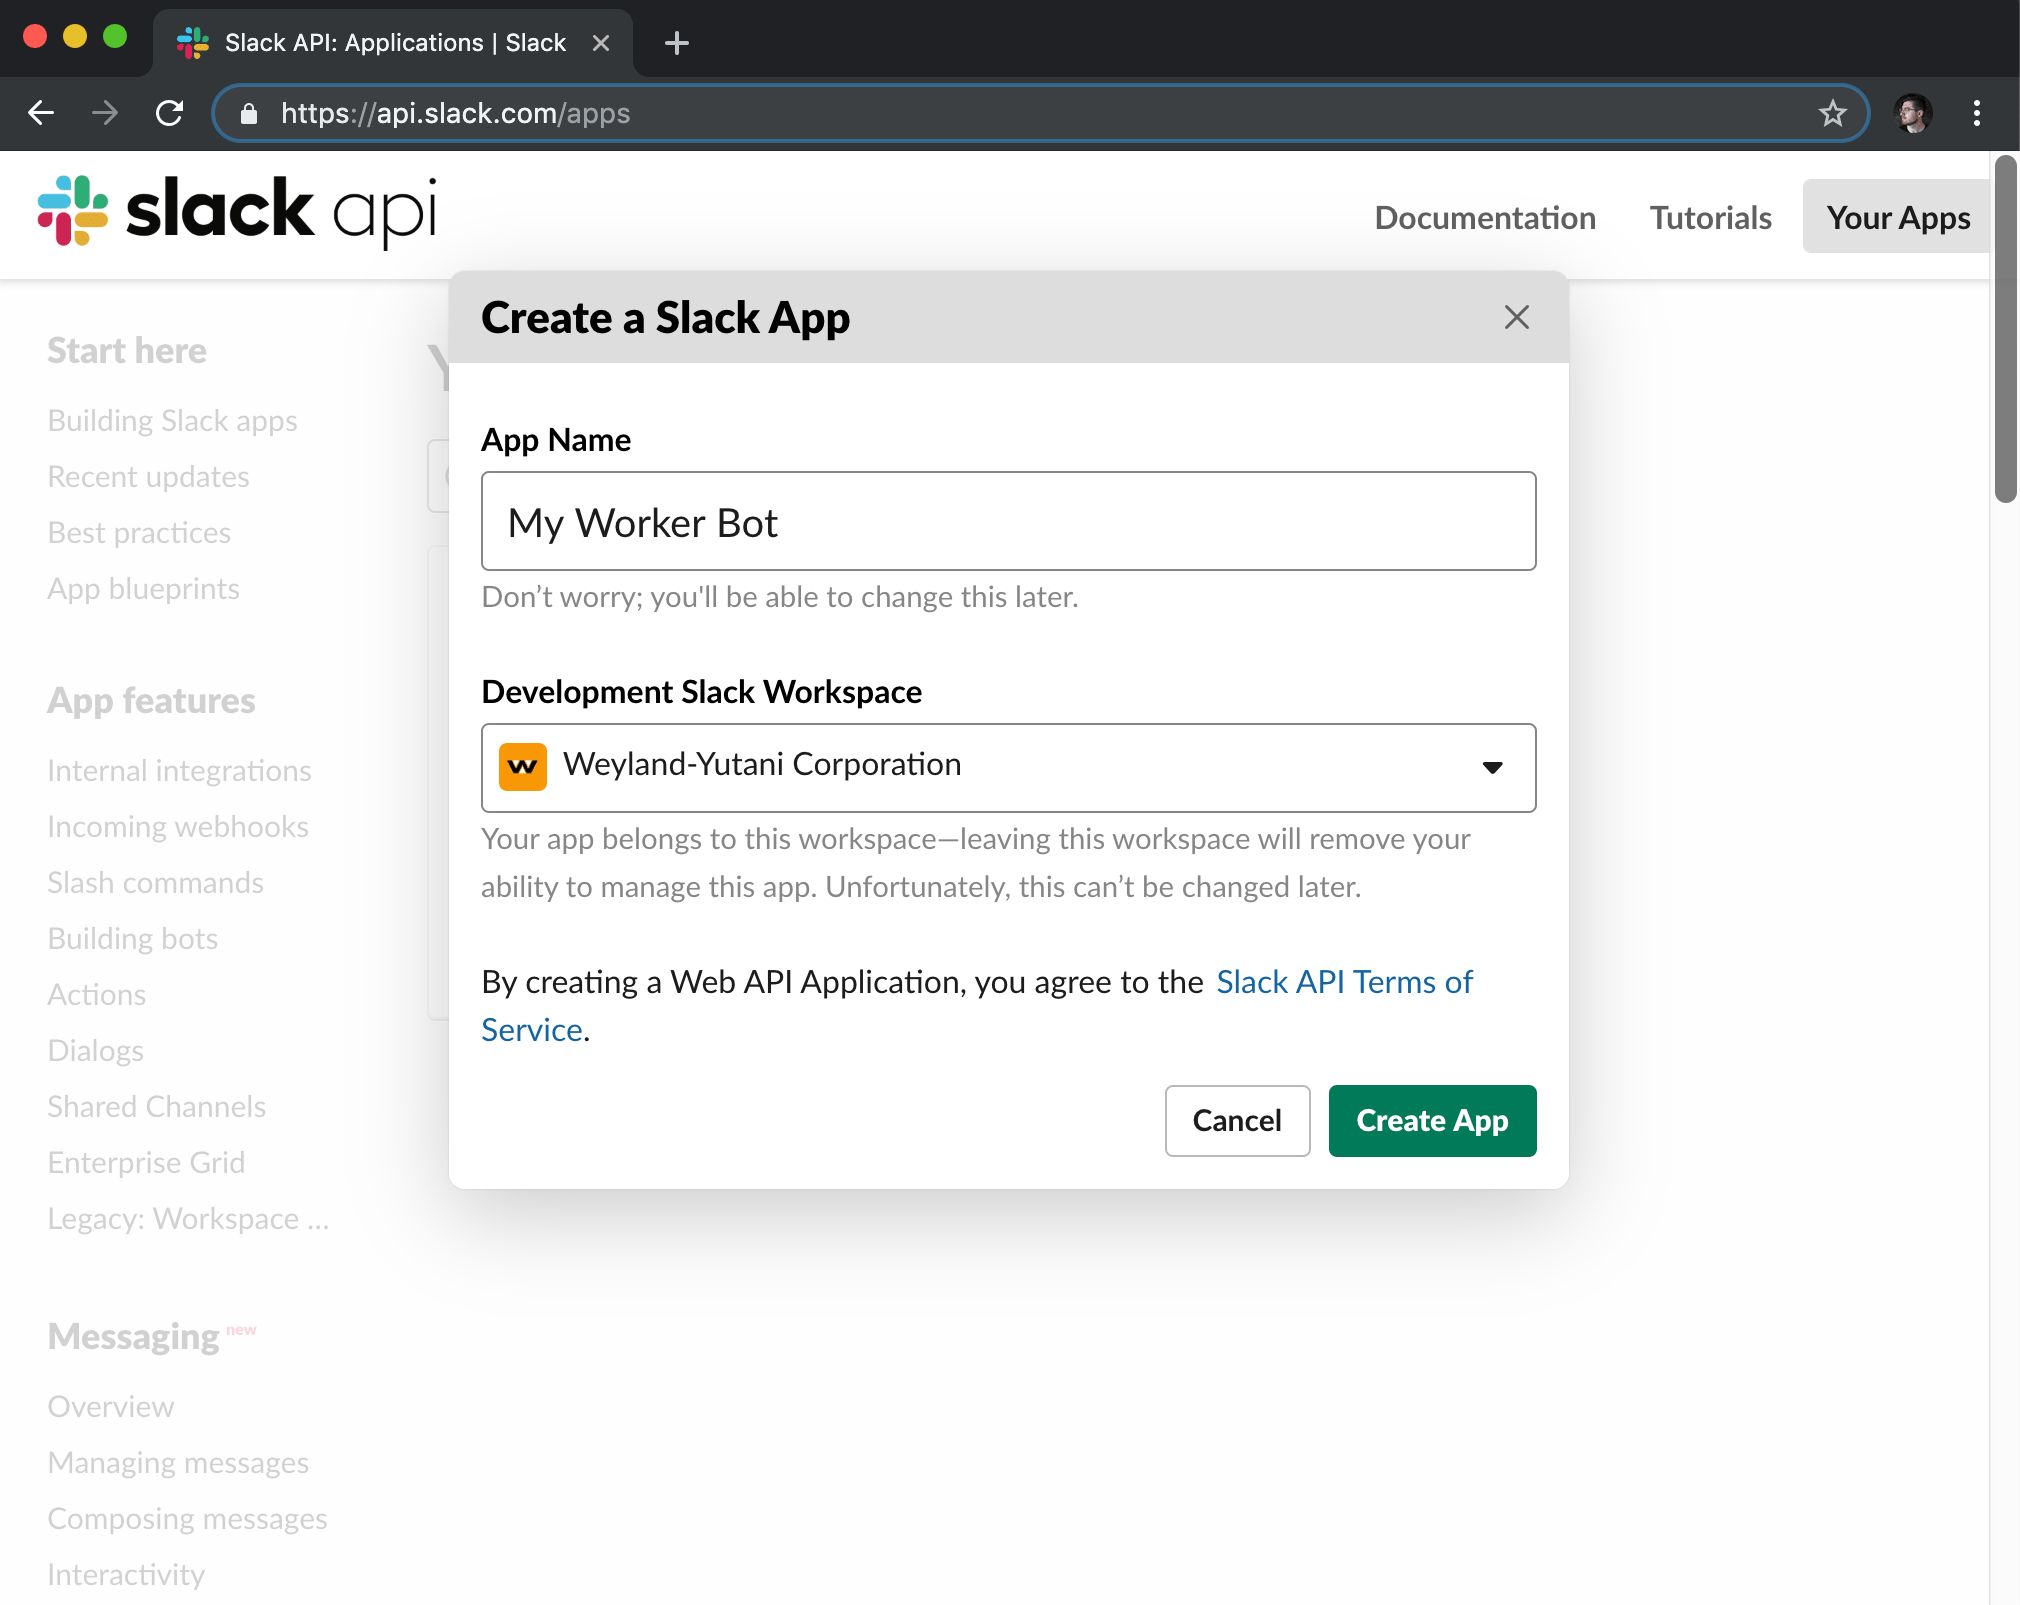 To create a Slackbot, first create a Slack App